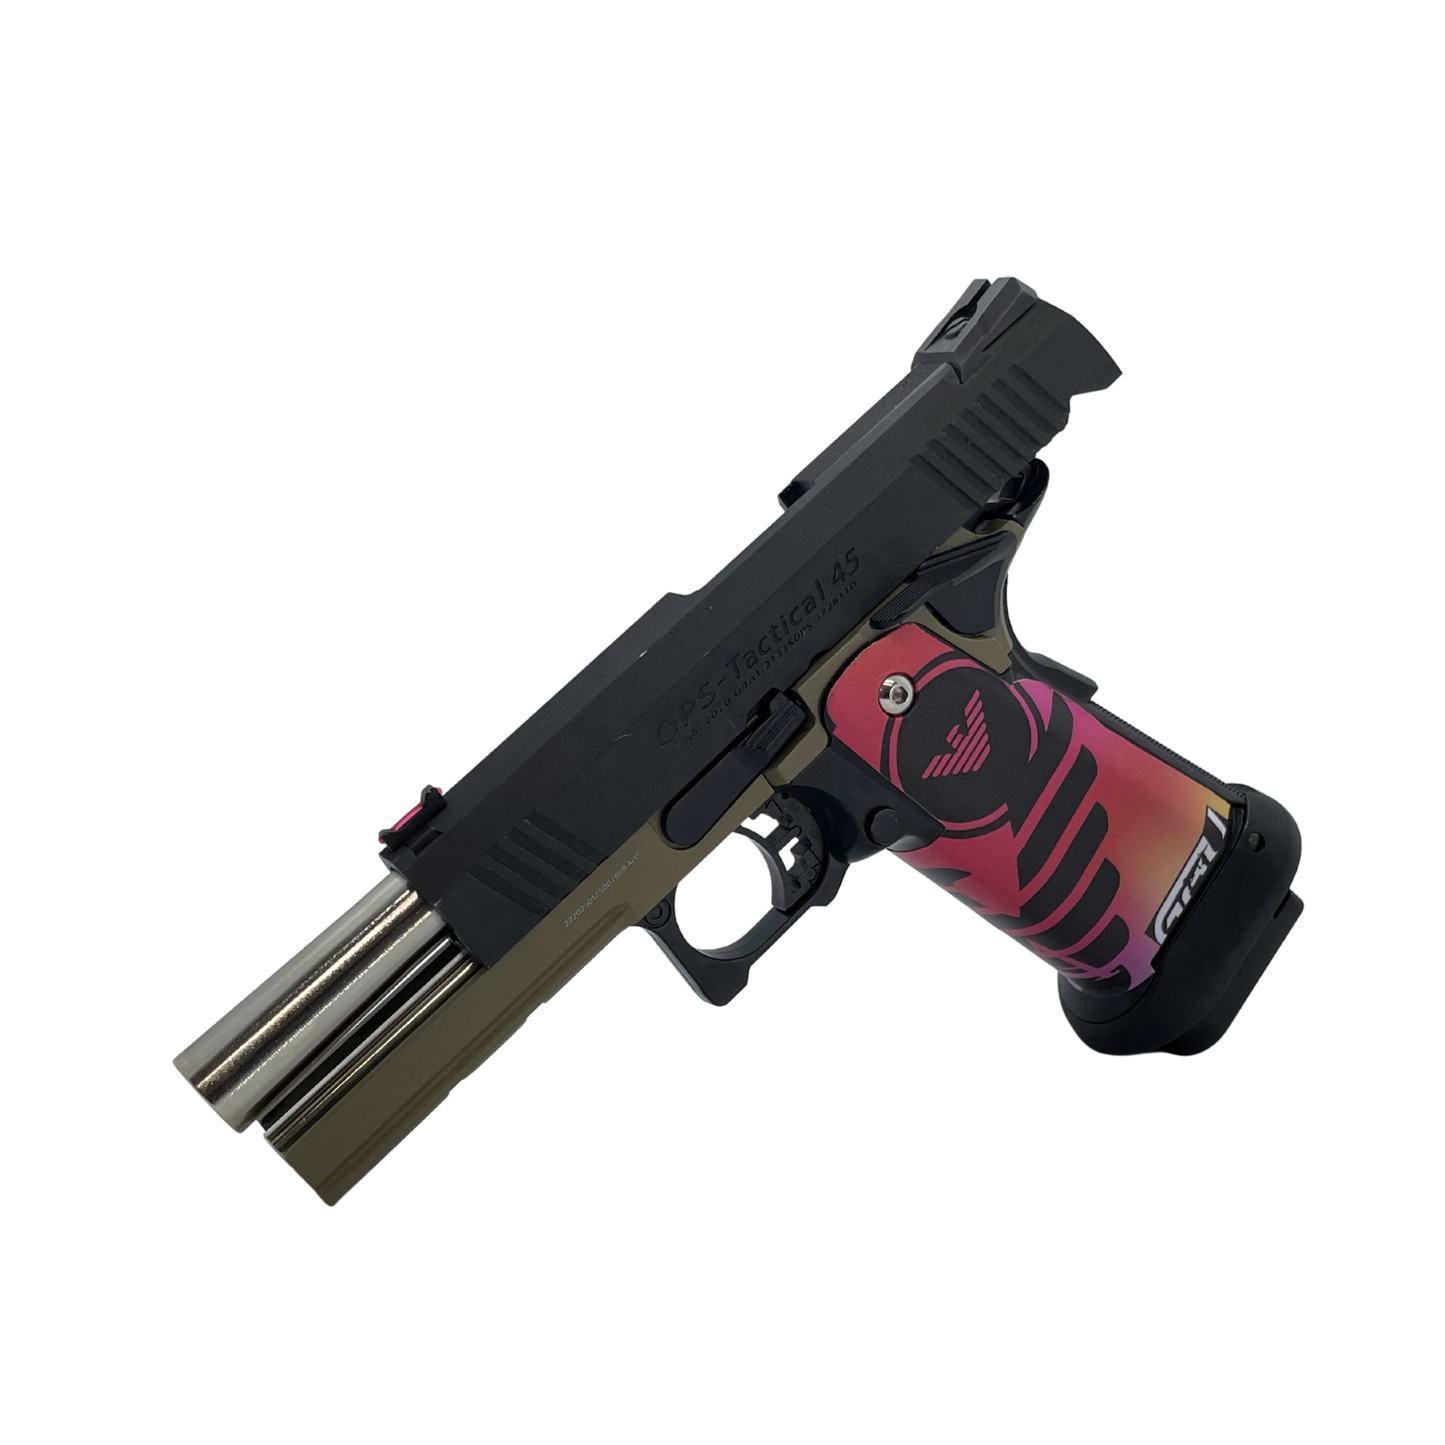 Custom "Armani" G/E Hi-Capa 4.3 Gas Pistol - Gel Blaster